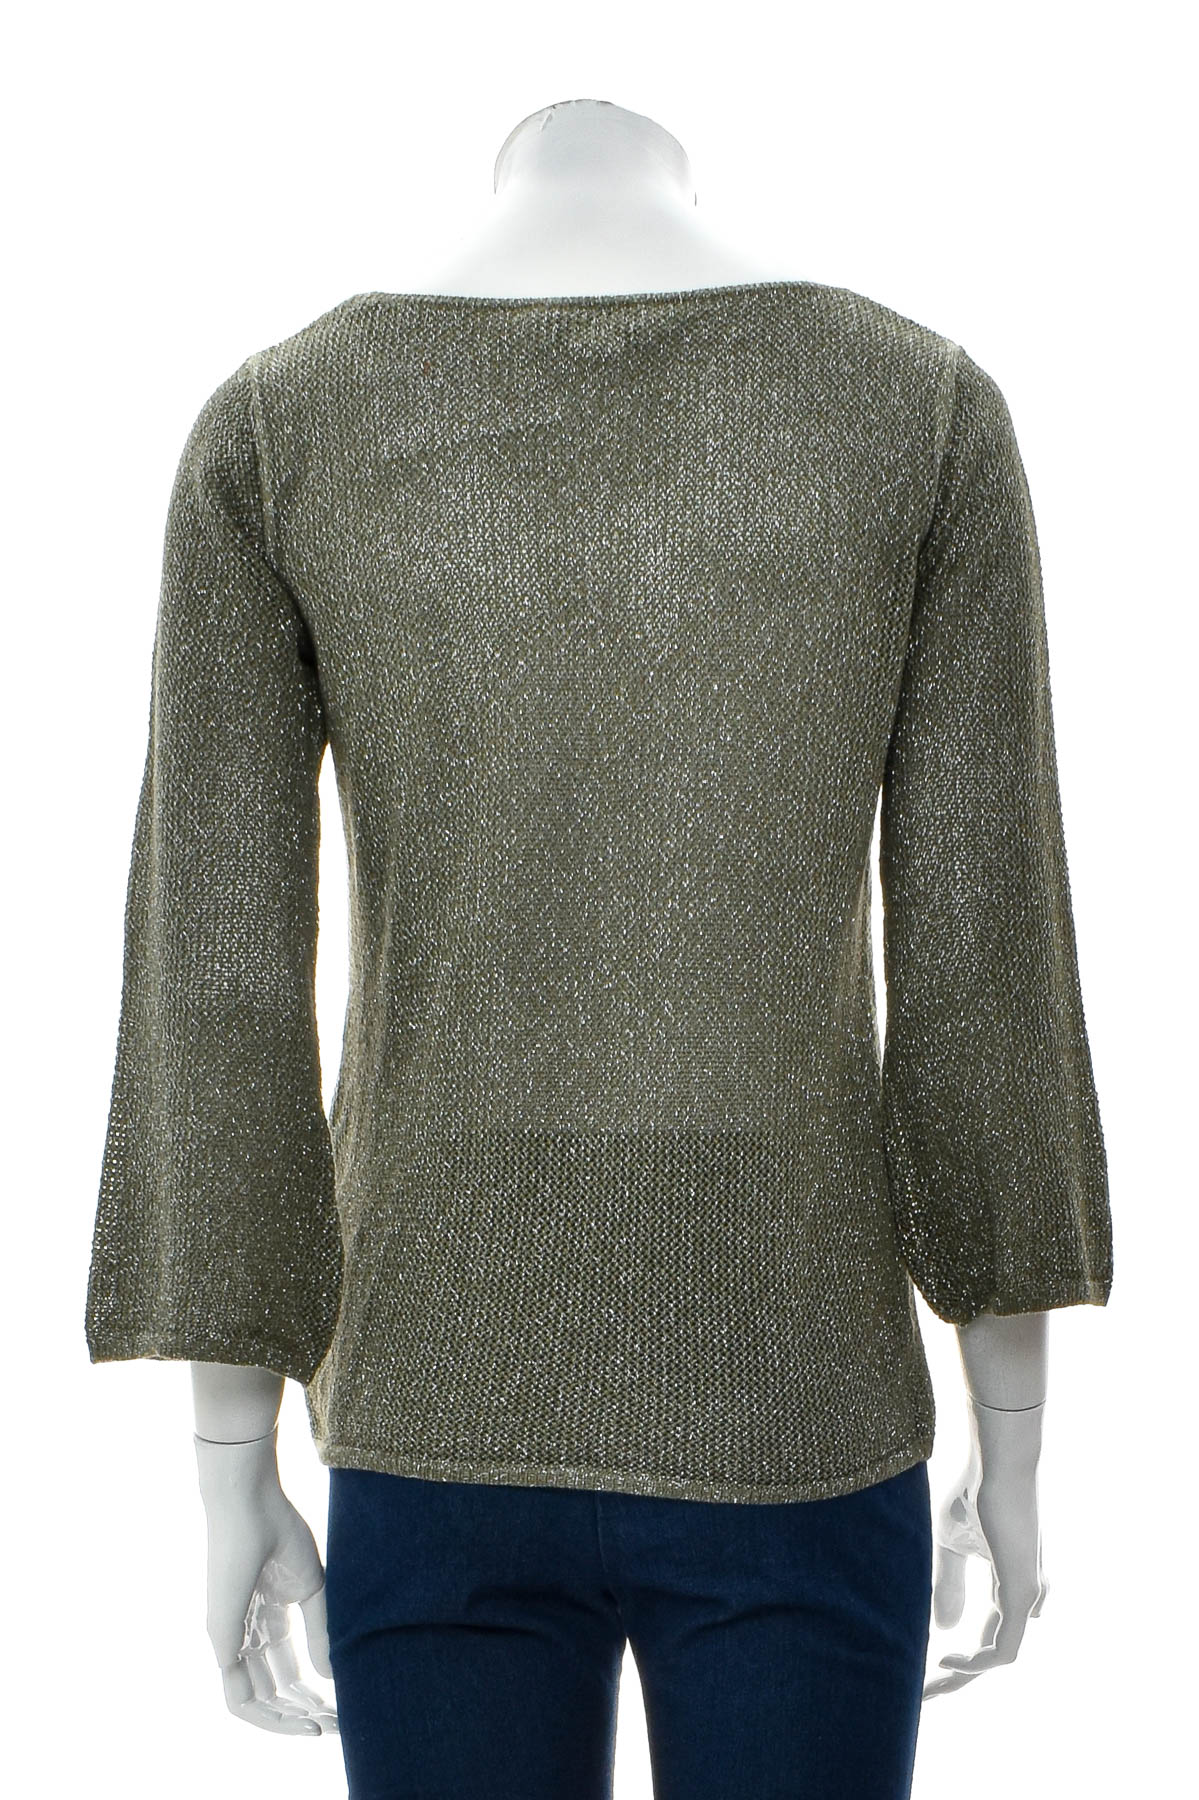 Women's sweater - Rick Cardona - 1